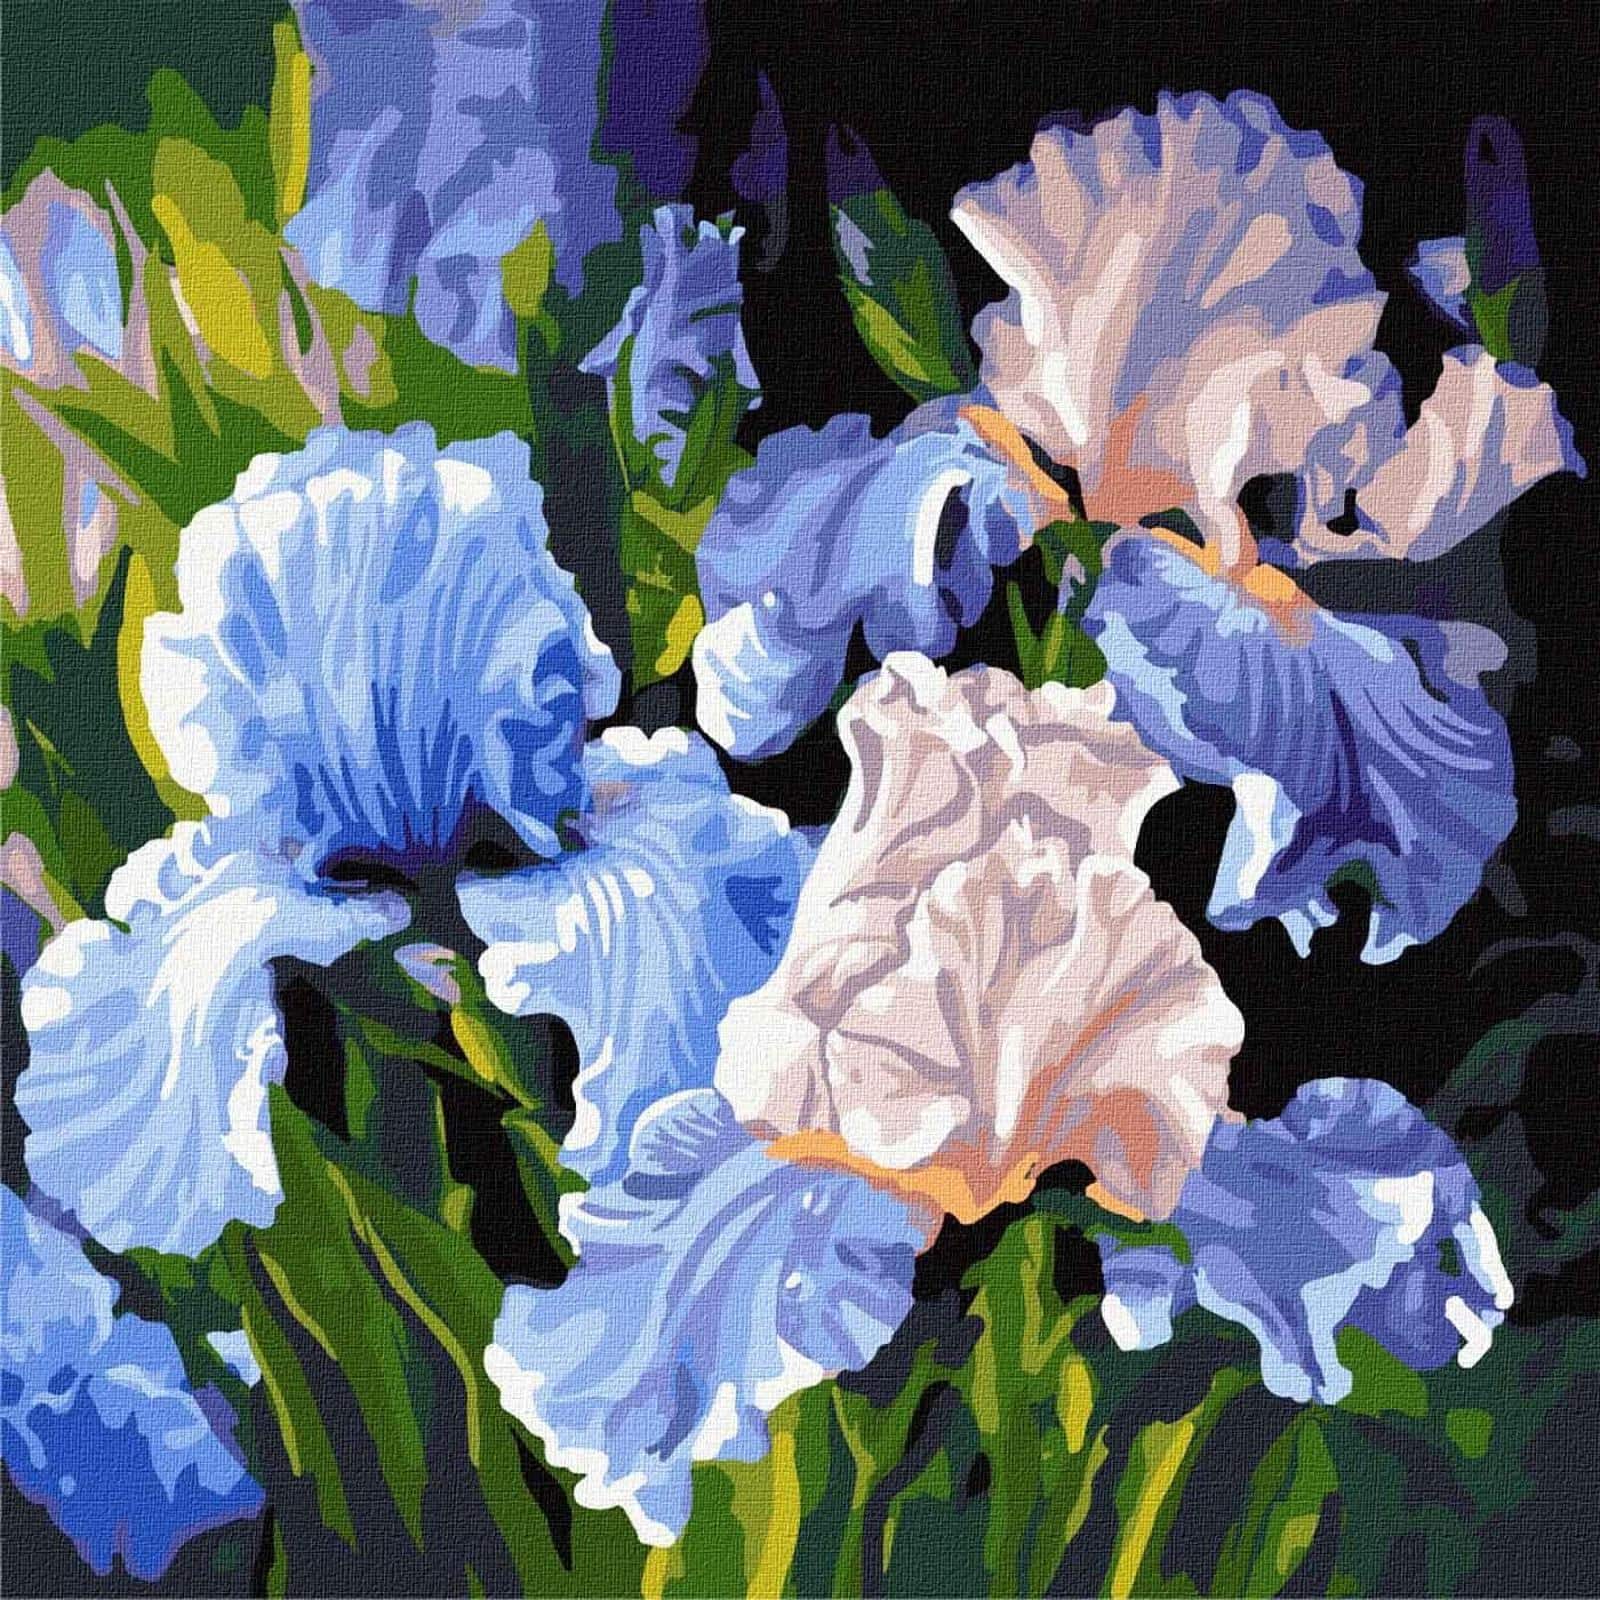 Ideyka Bright Irises Painting by Numbers Kit